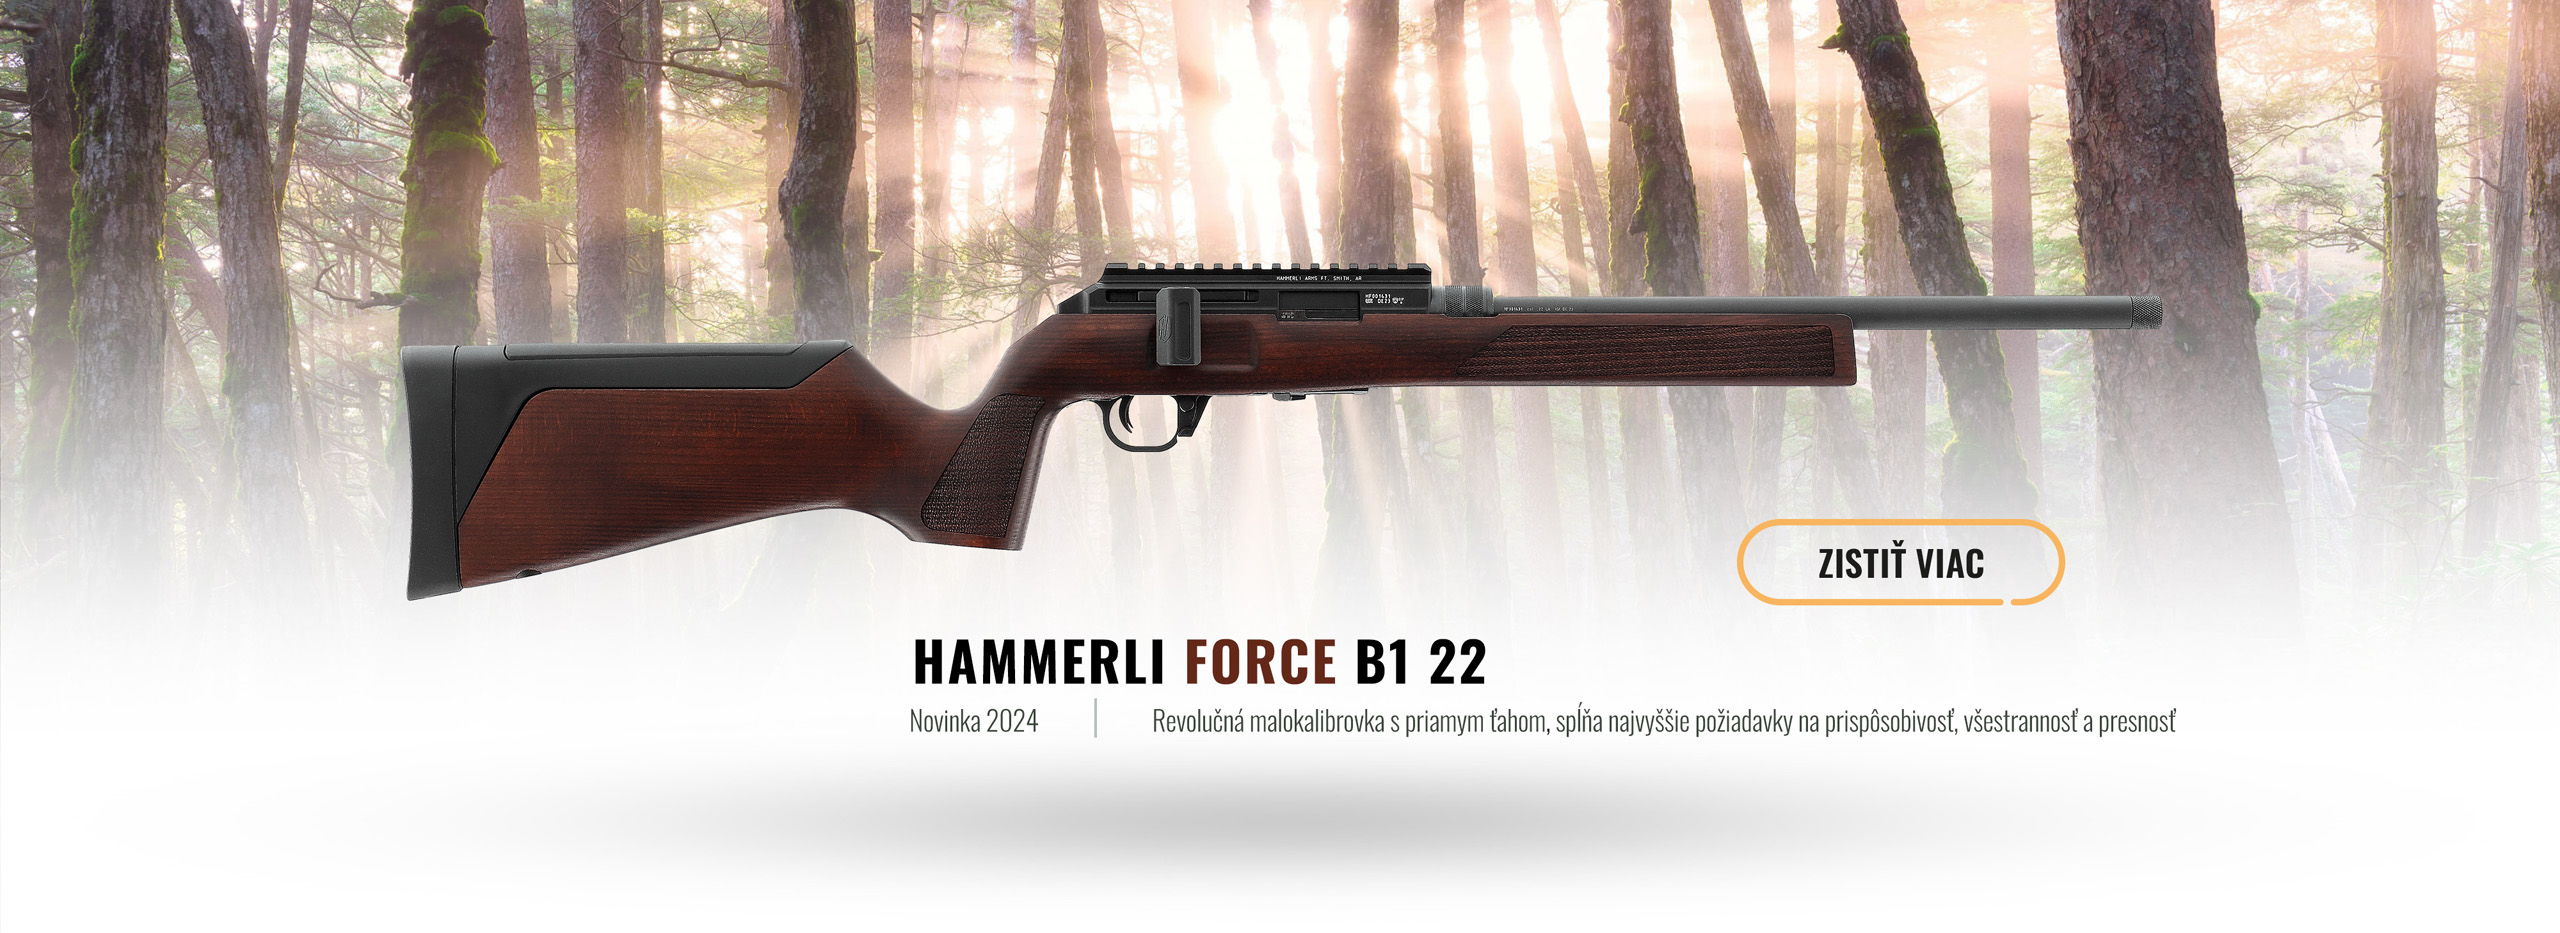 HAMMERLI FORCE B1 22